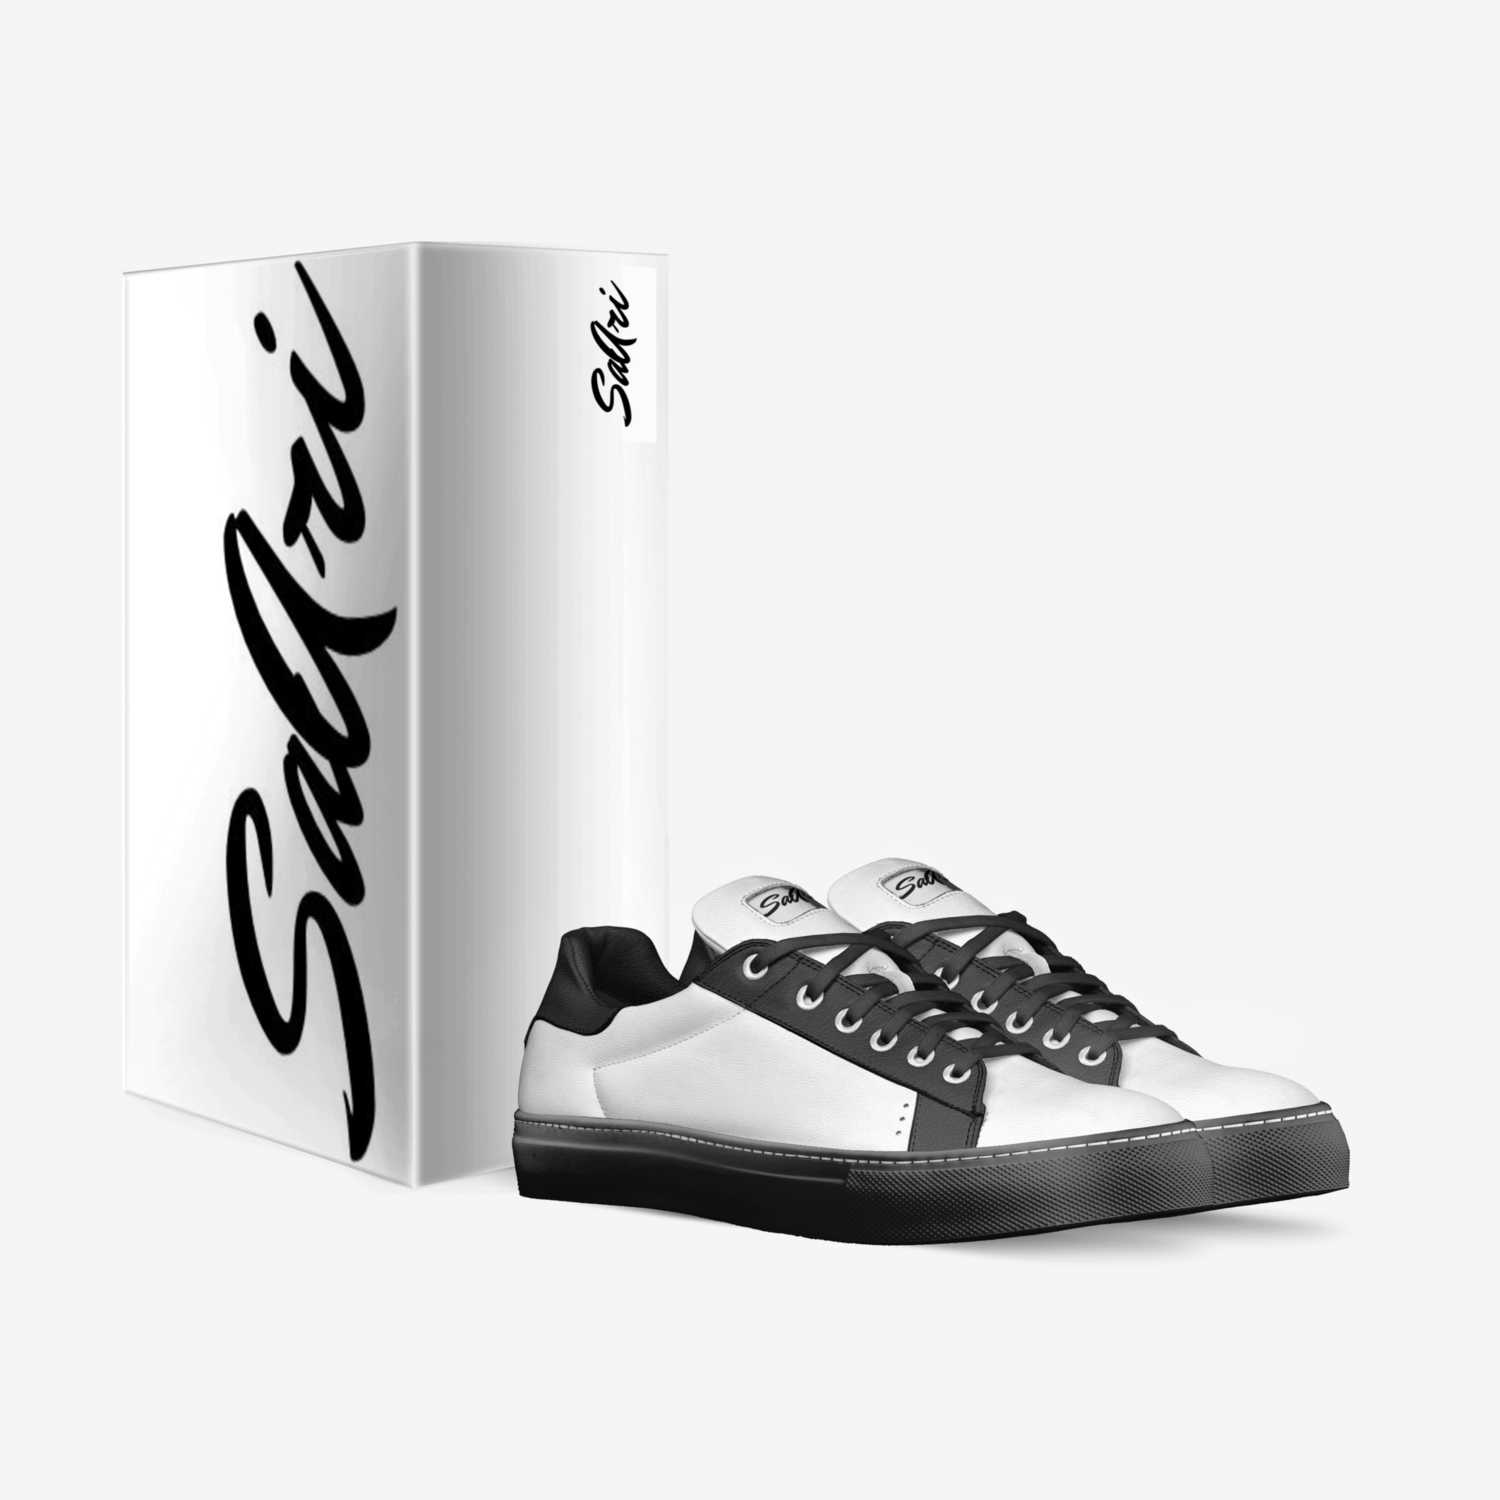 SaAri custom made in Italy shoes by Oli Olason | Box view